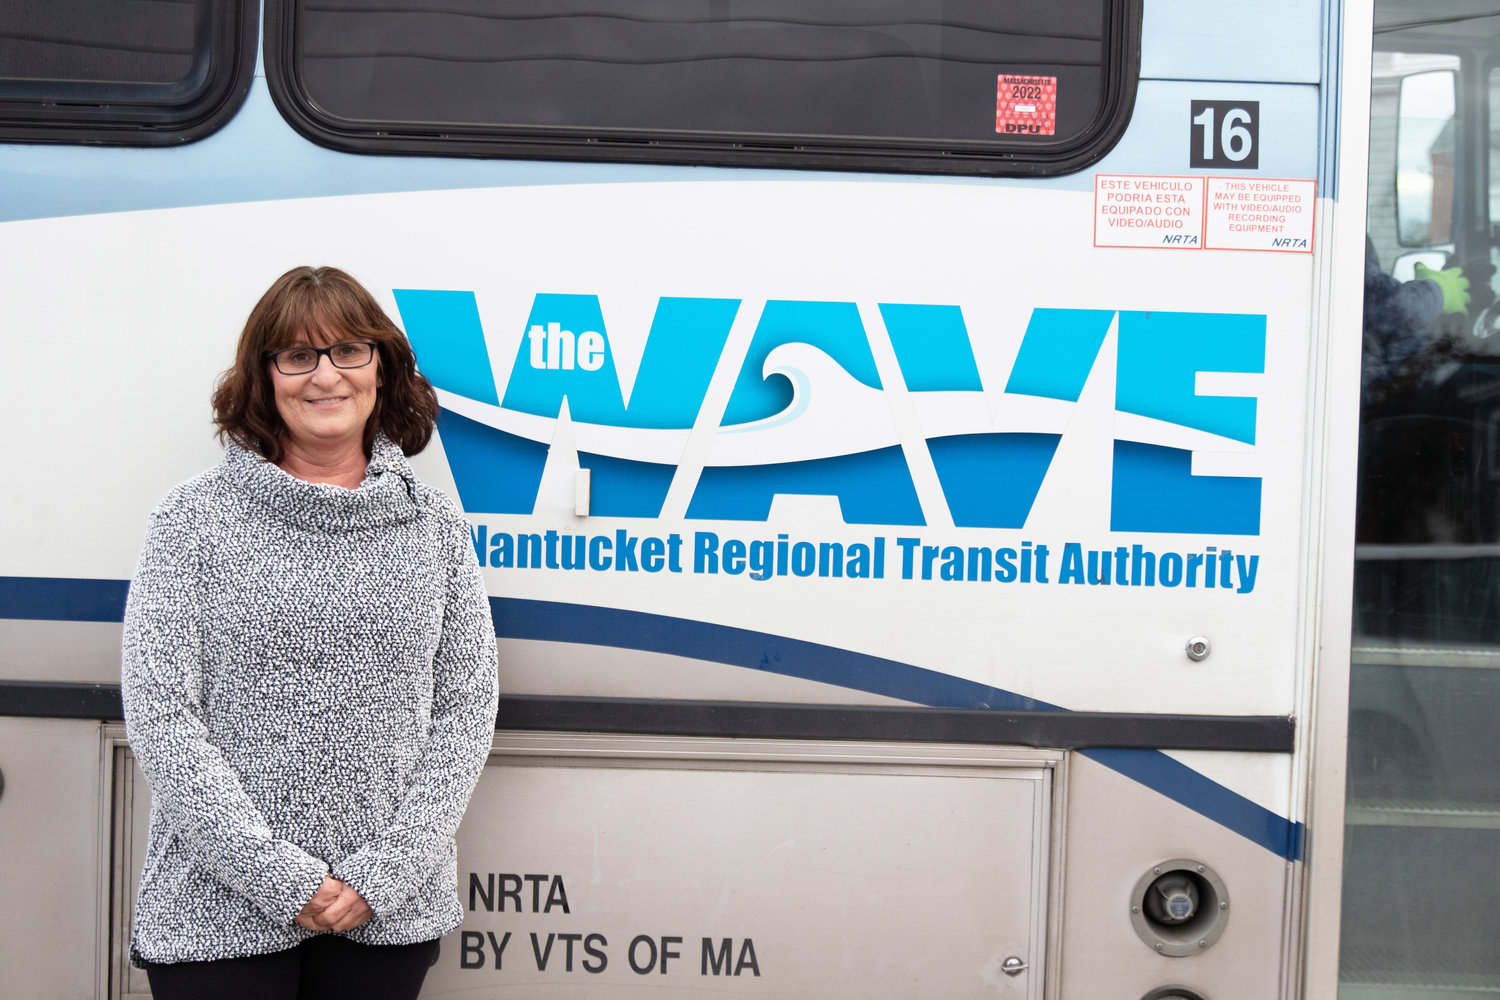 Paula Leary is retiring next week after 26 years as Nantucket Regional Transit Authority administrator.